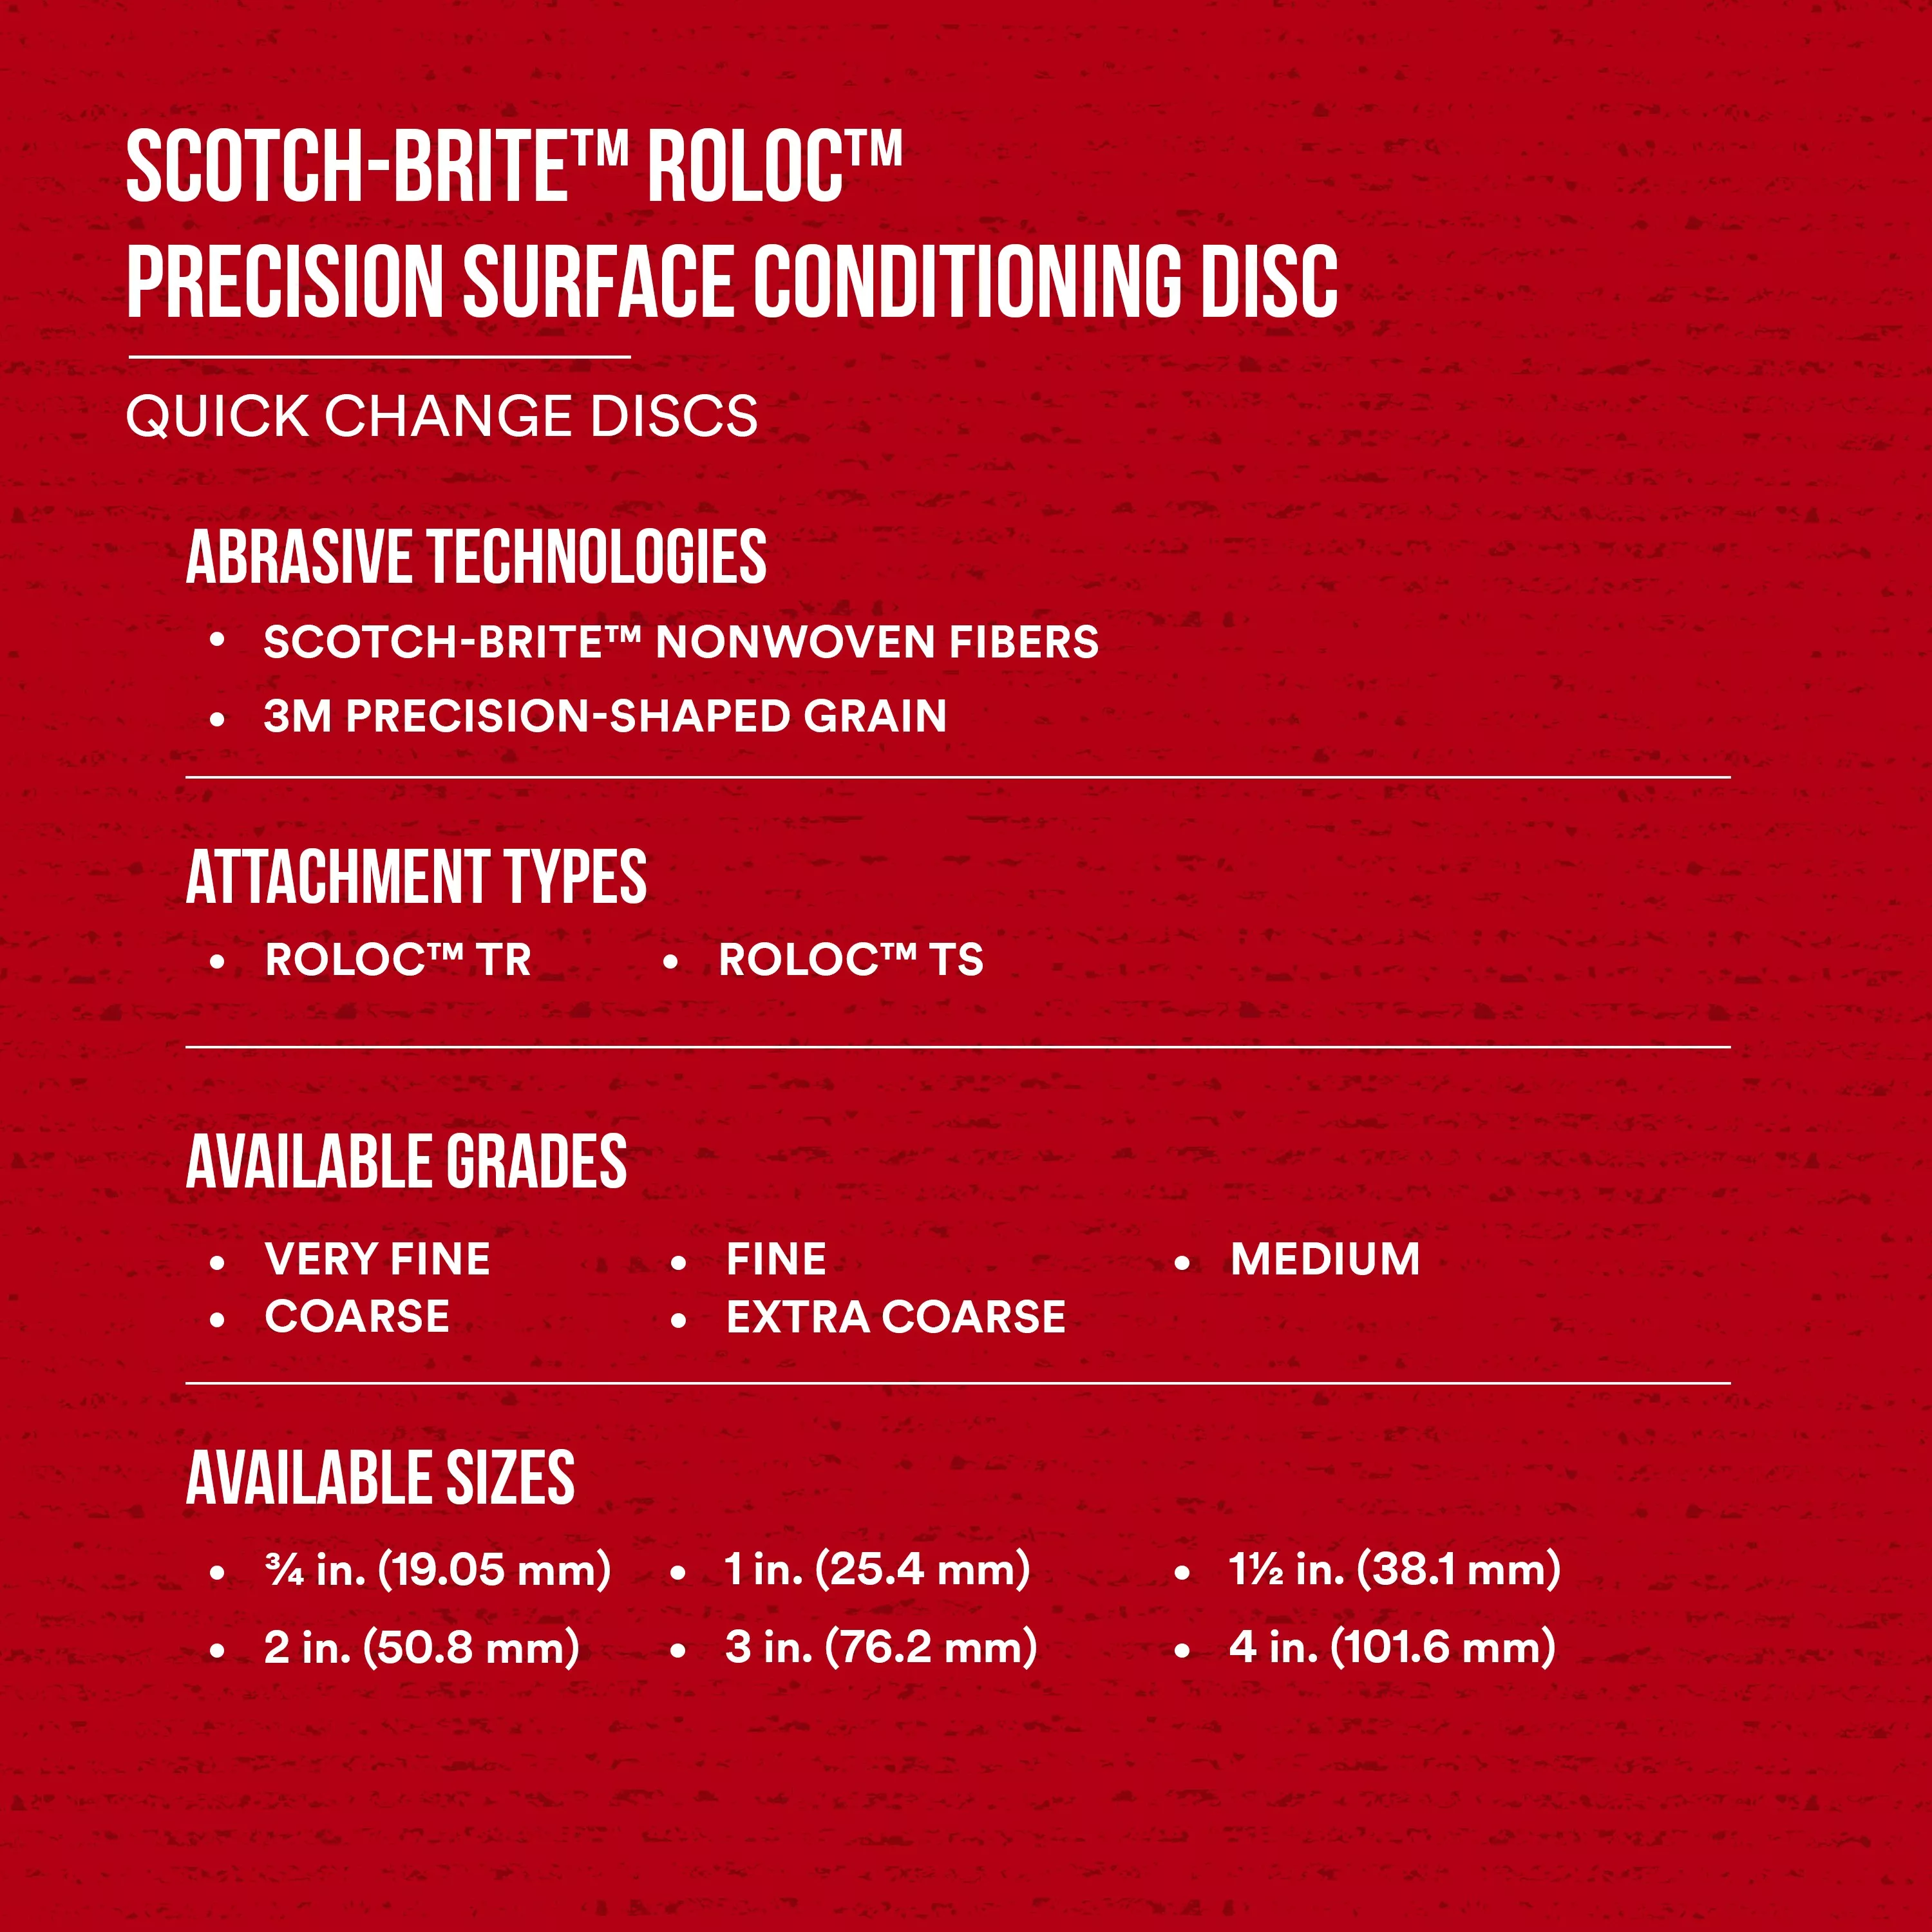 SKU 7100264664 | Scotch-Brite™ Roloc™ Precision Surface Conditioning Disc